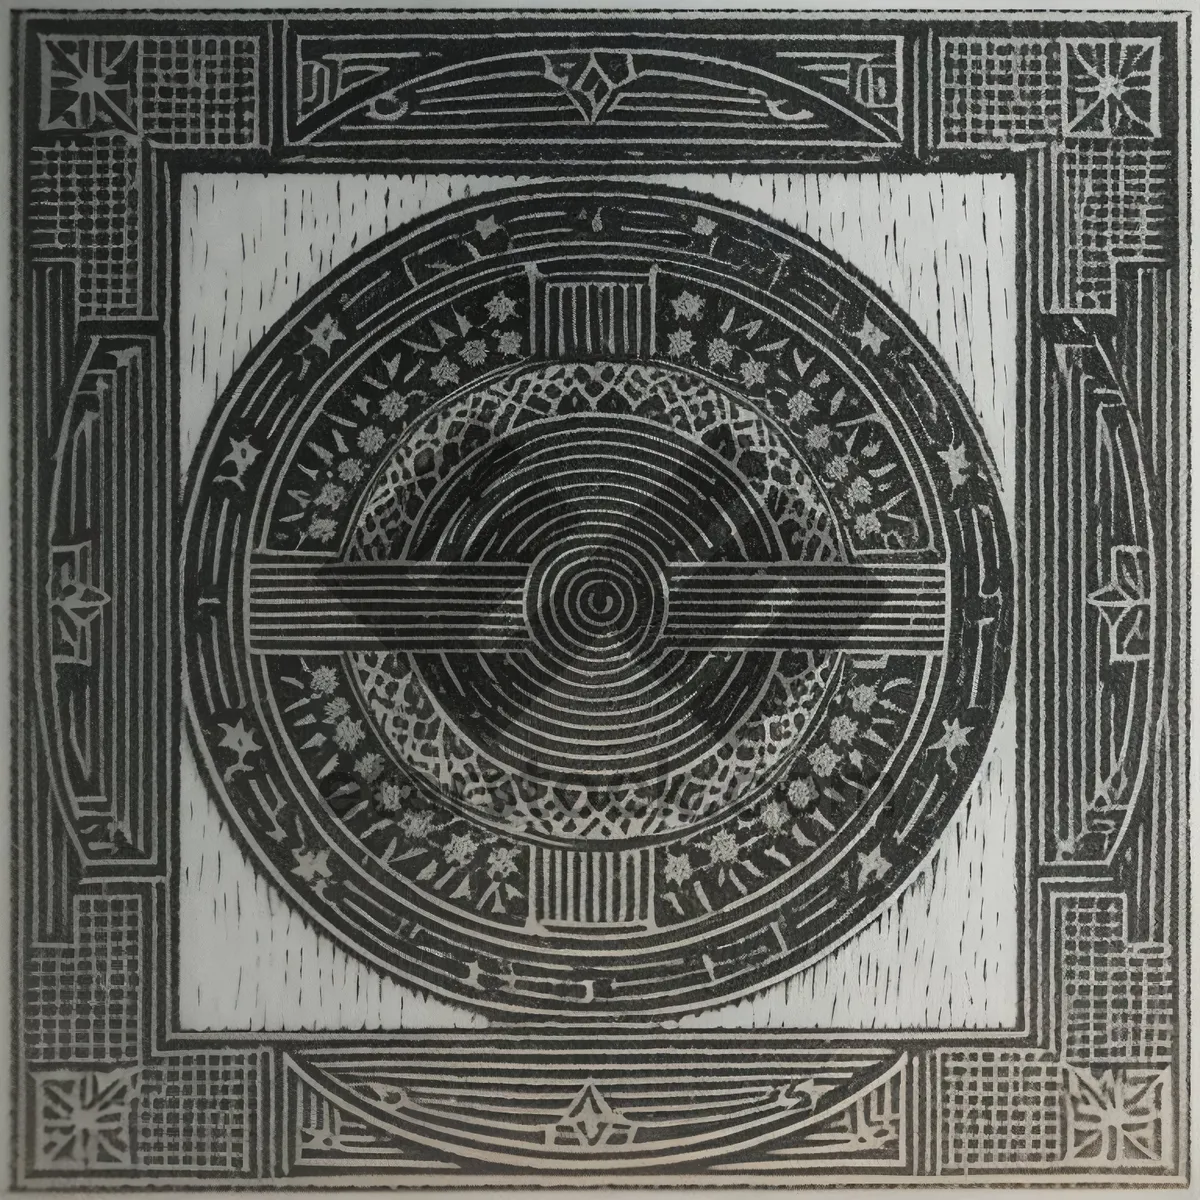 Picture of Arabesque Mosaic Manhole Cover: Ancient Artistic Design